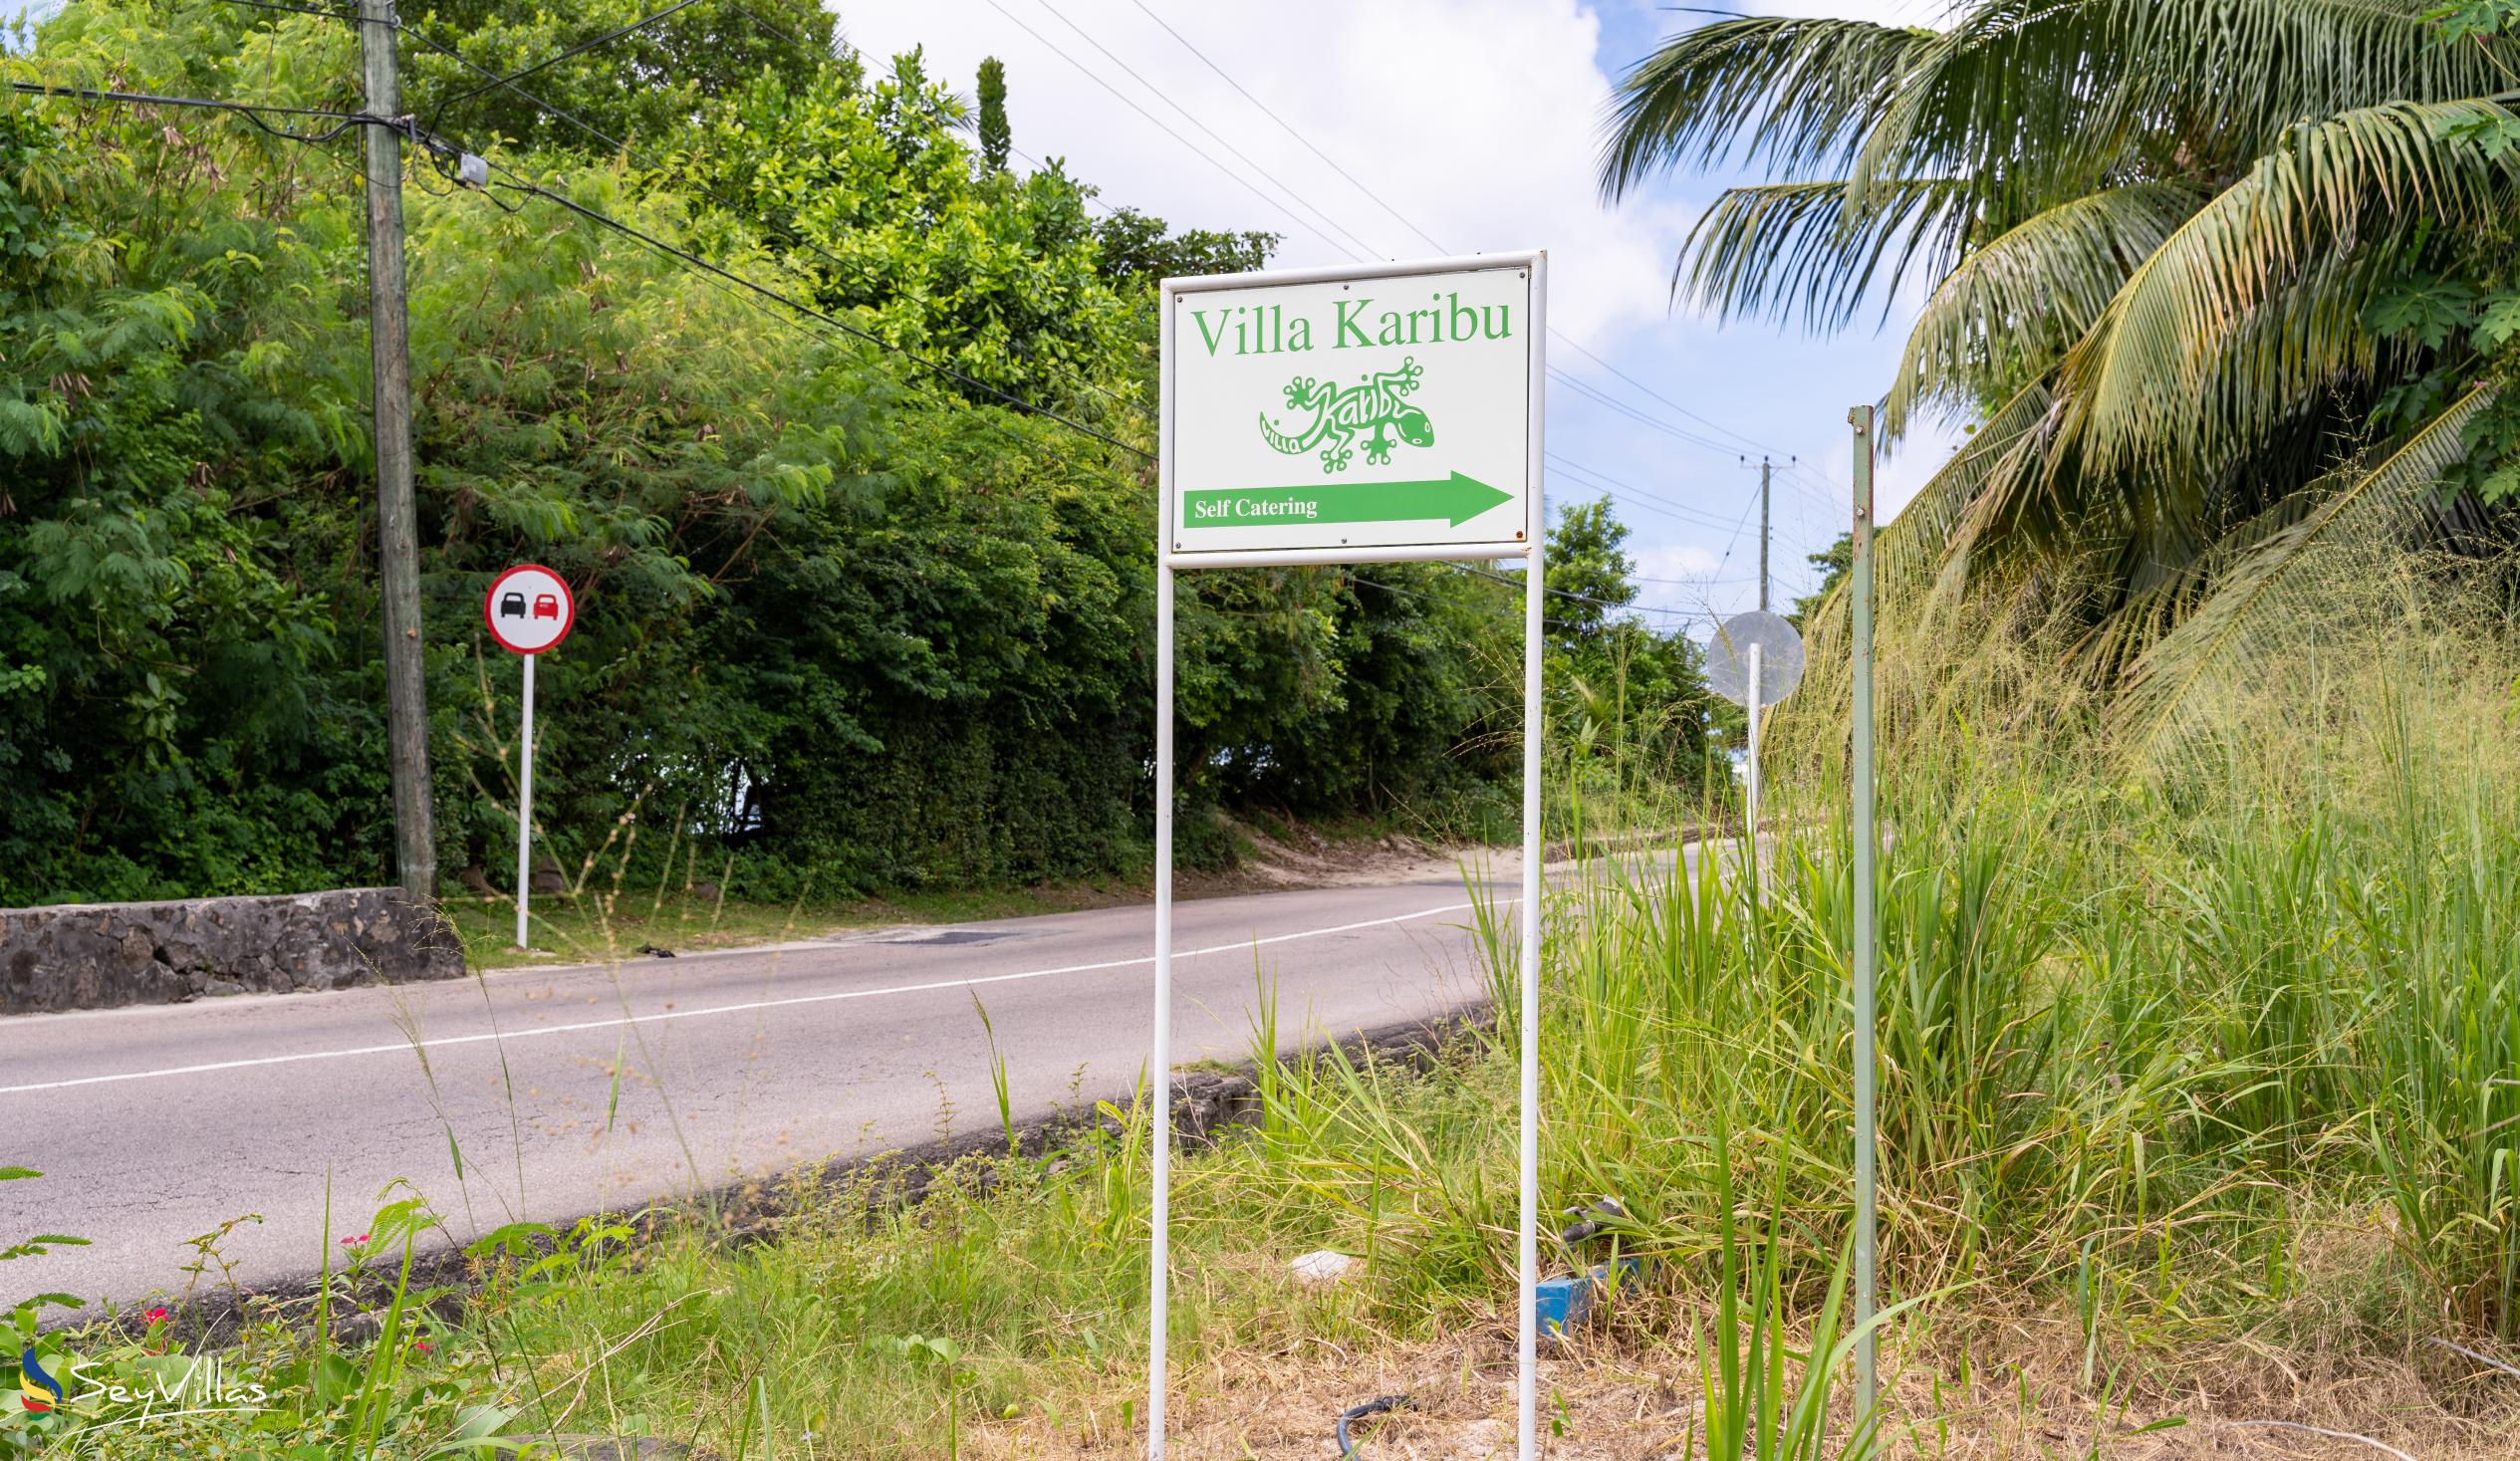 Foto 20: Villa Karibu - Lage - Mahé (Seychellen)